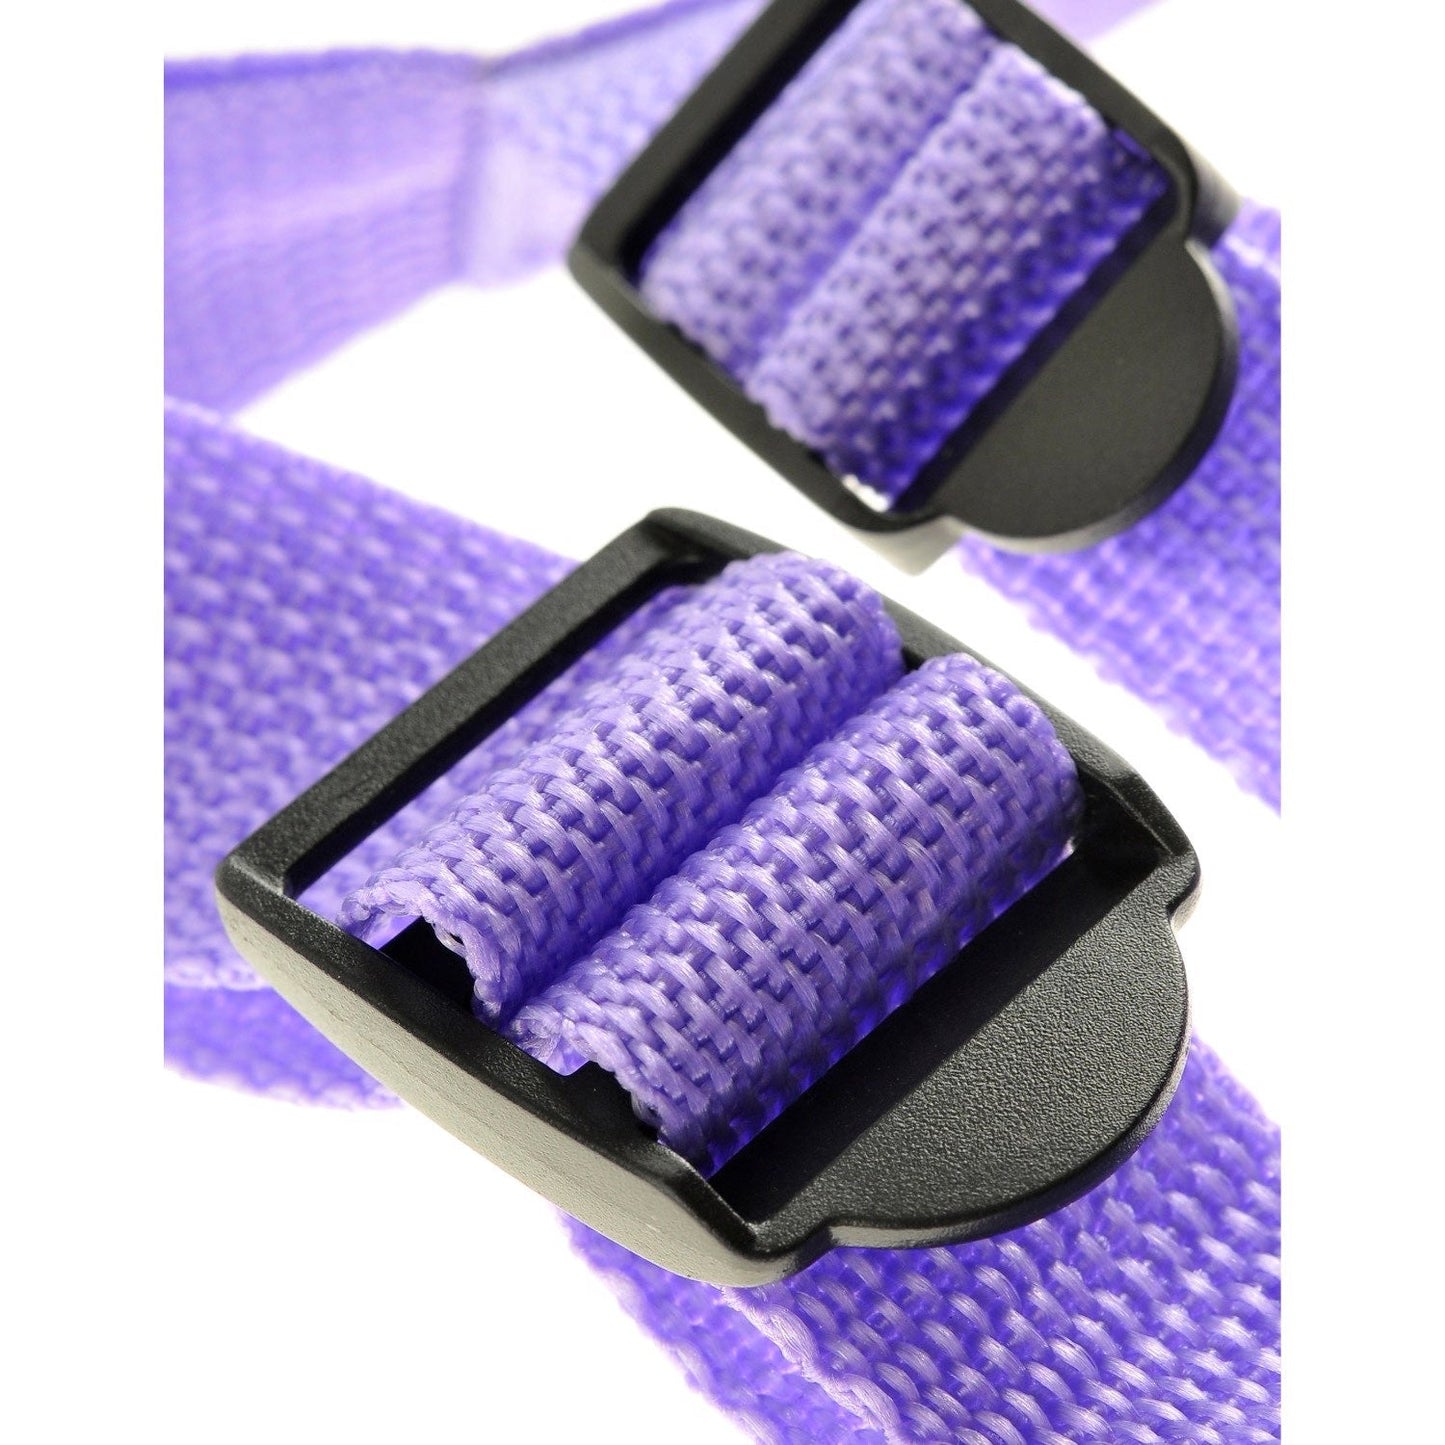 7" Strap-On Suspender Harness Set - Purple 17.8 cm Strap-On with Suspender Harness